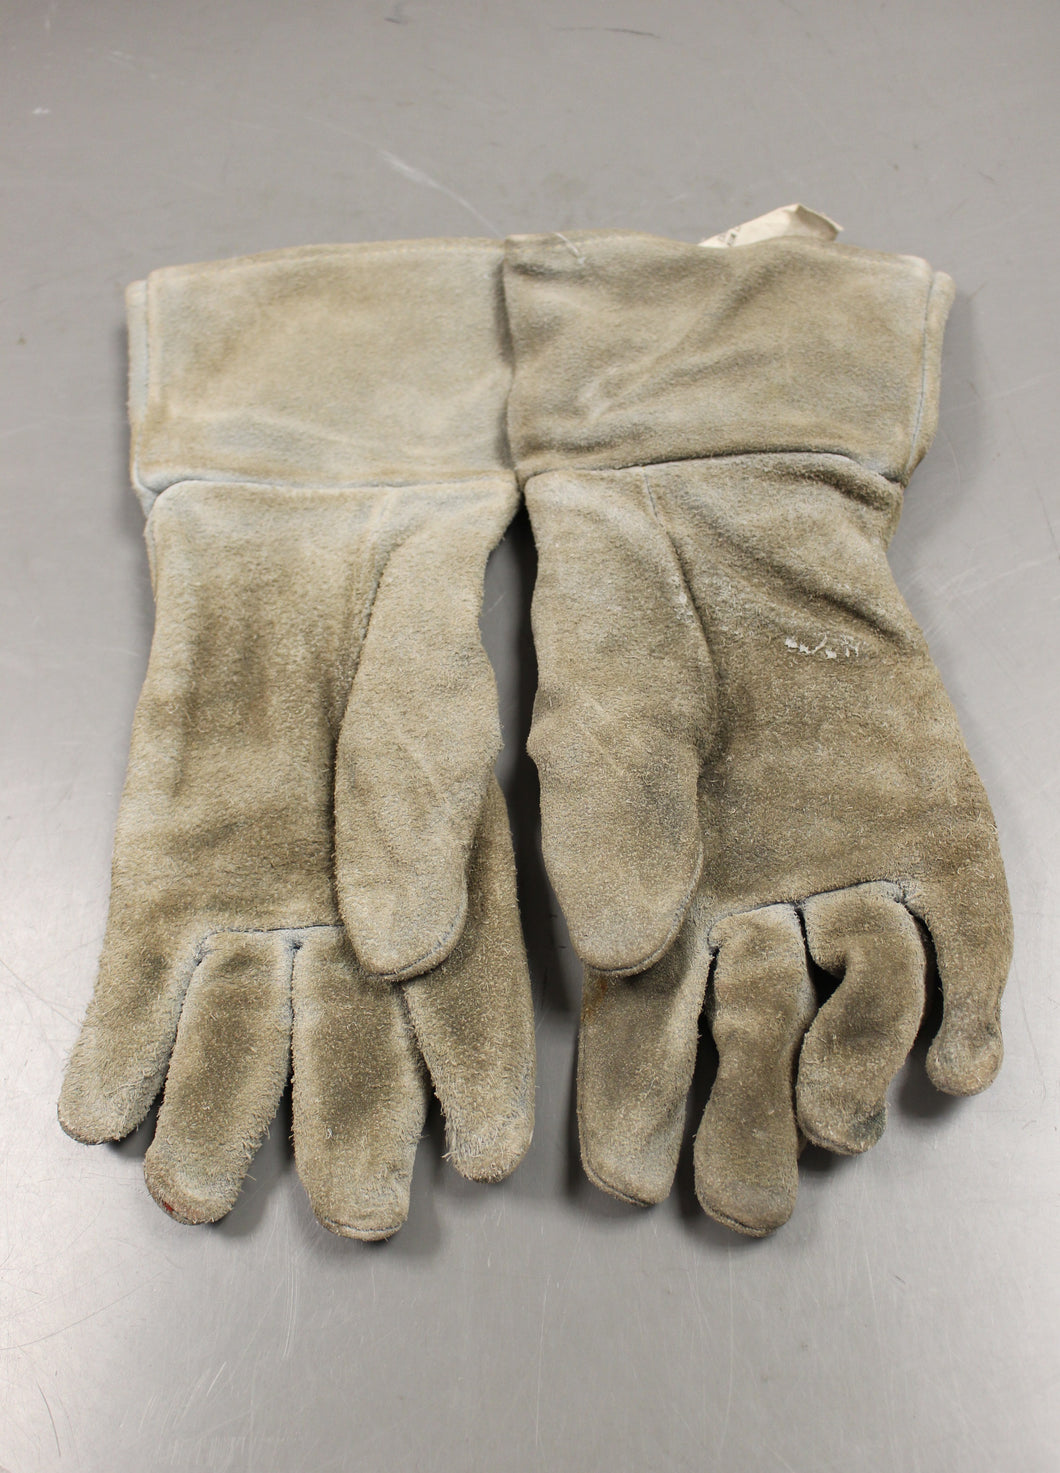 Firemen VII Leather Gloves - Sage Green - Large - Used